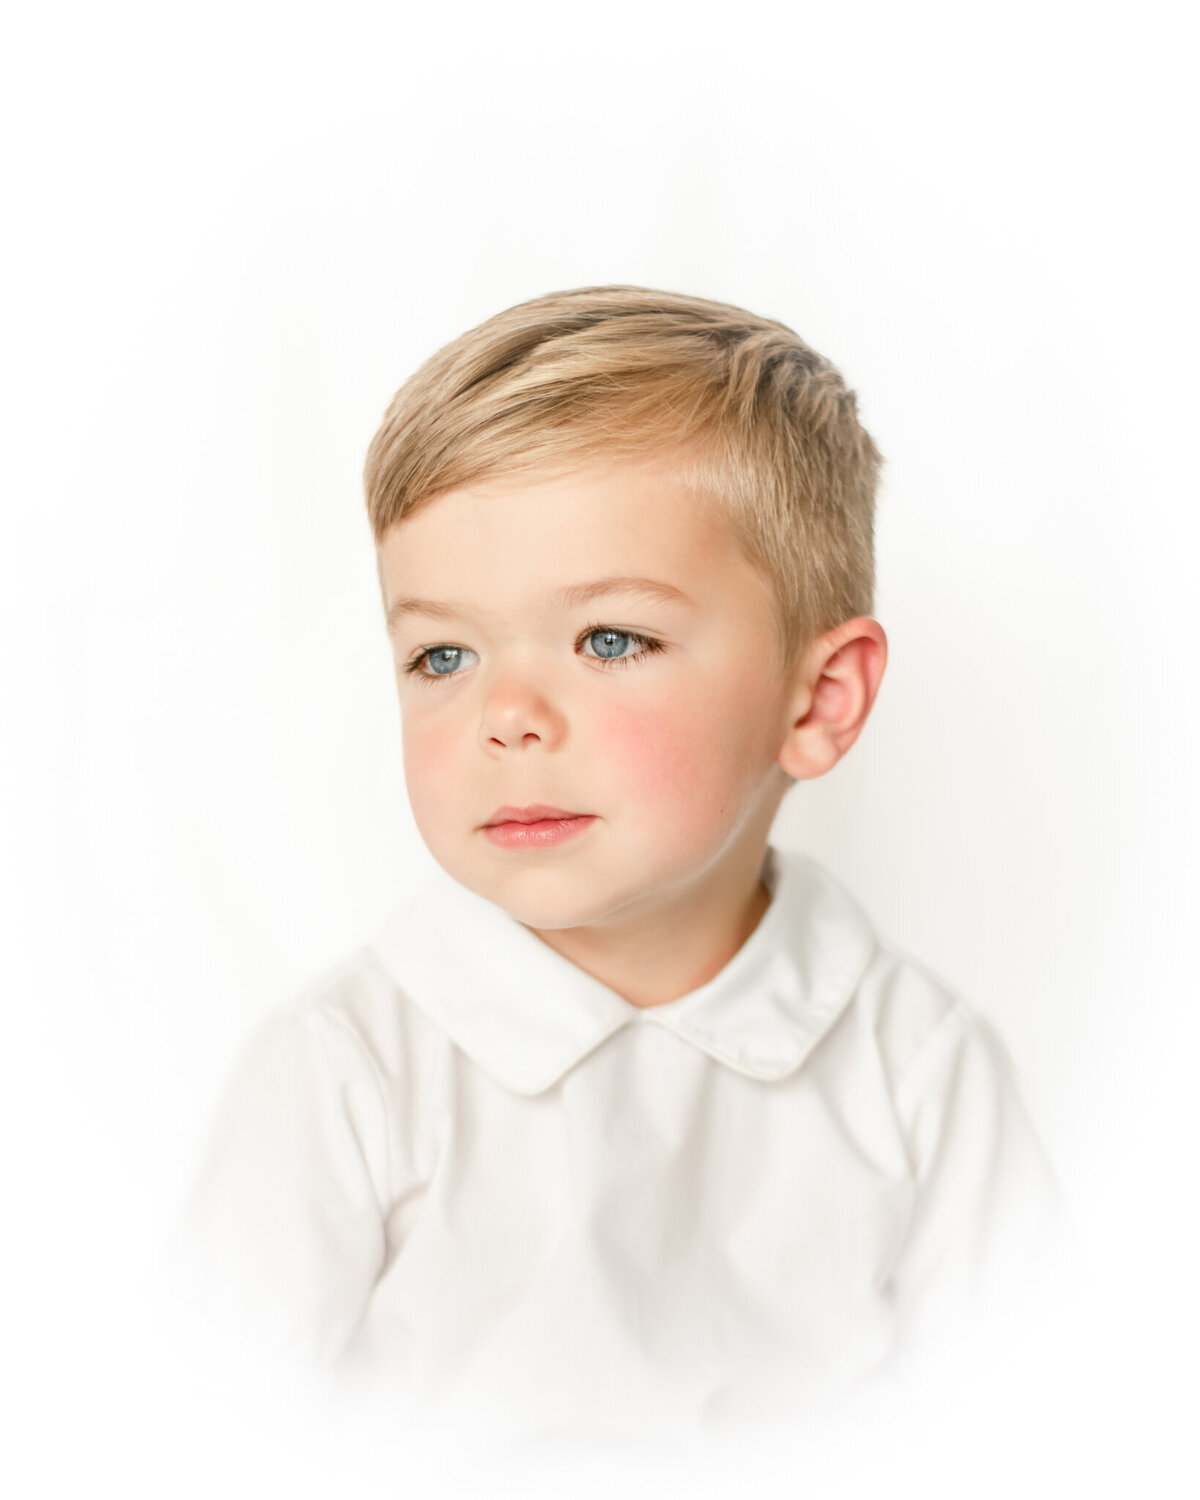 Vignette portrait of a little boy smiling to the side